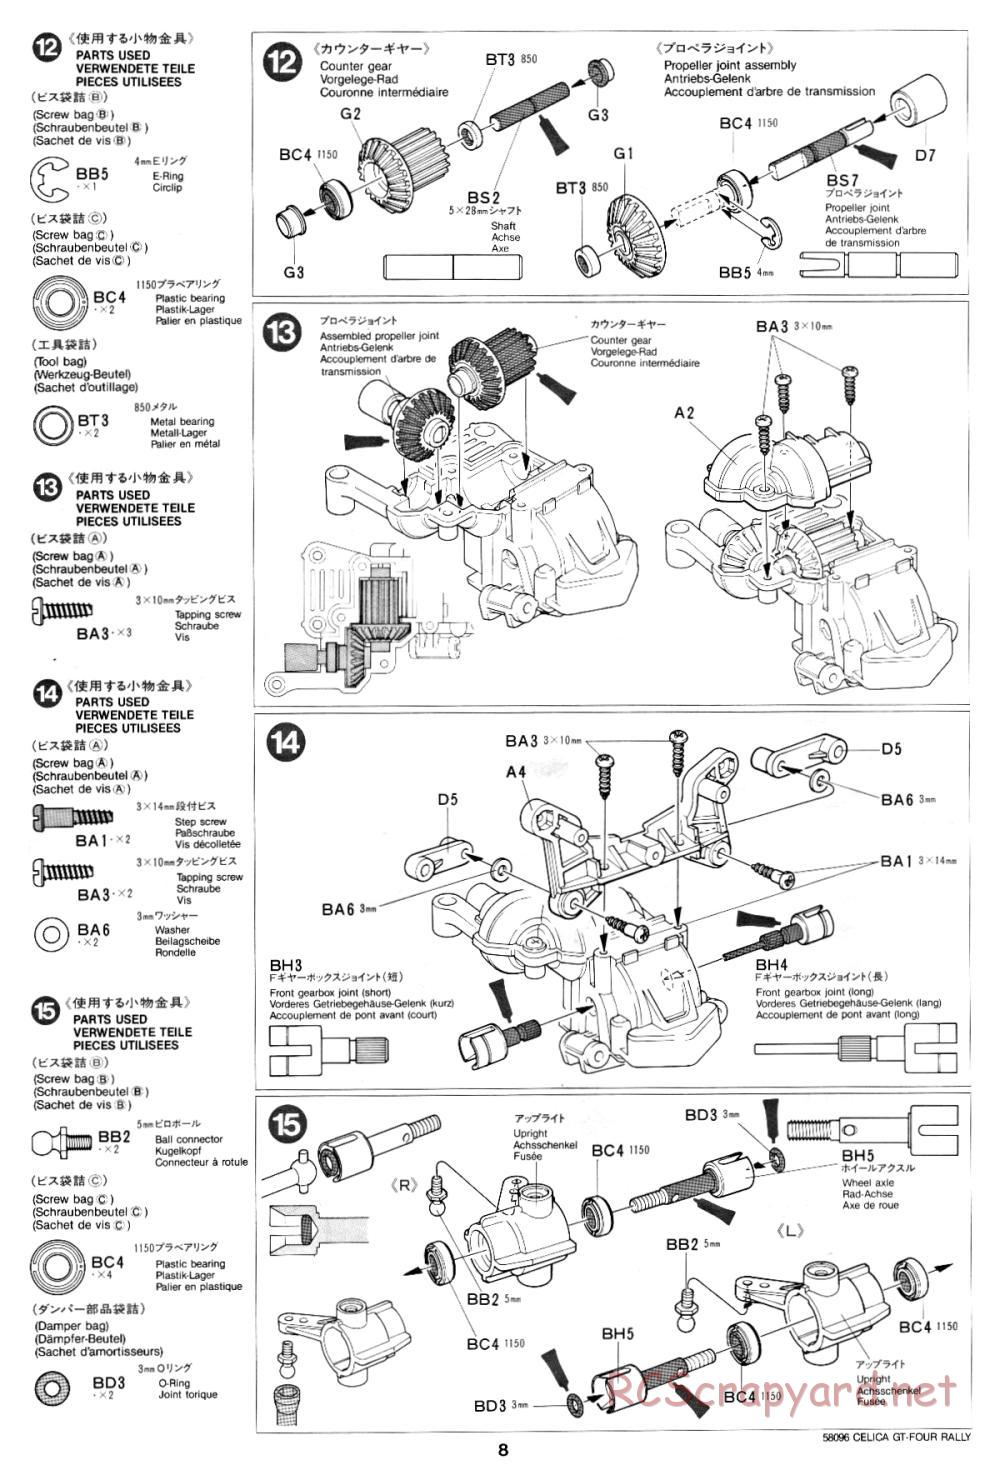 Tamiya - Toyota Celica GT-Four Rally - 58096 - Manual - Page 8